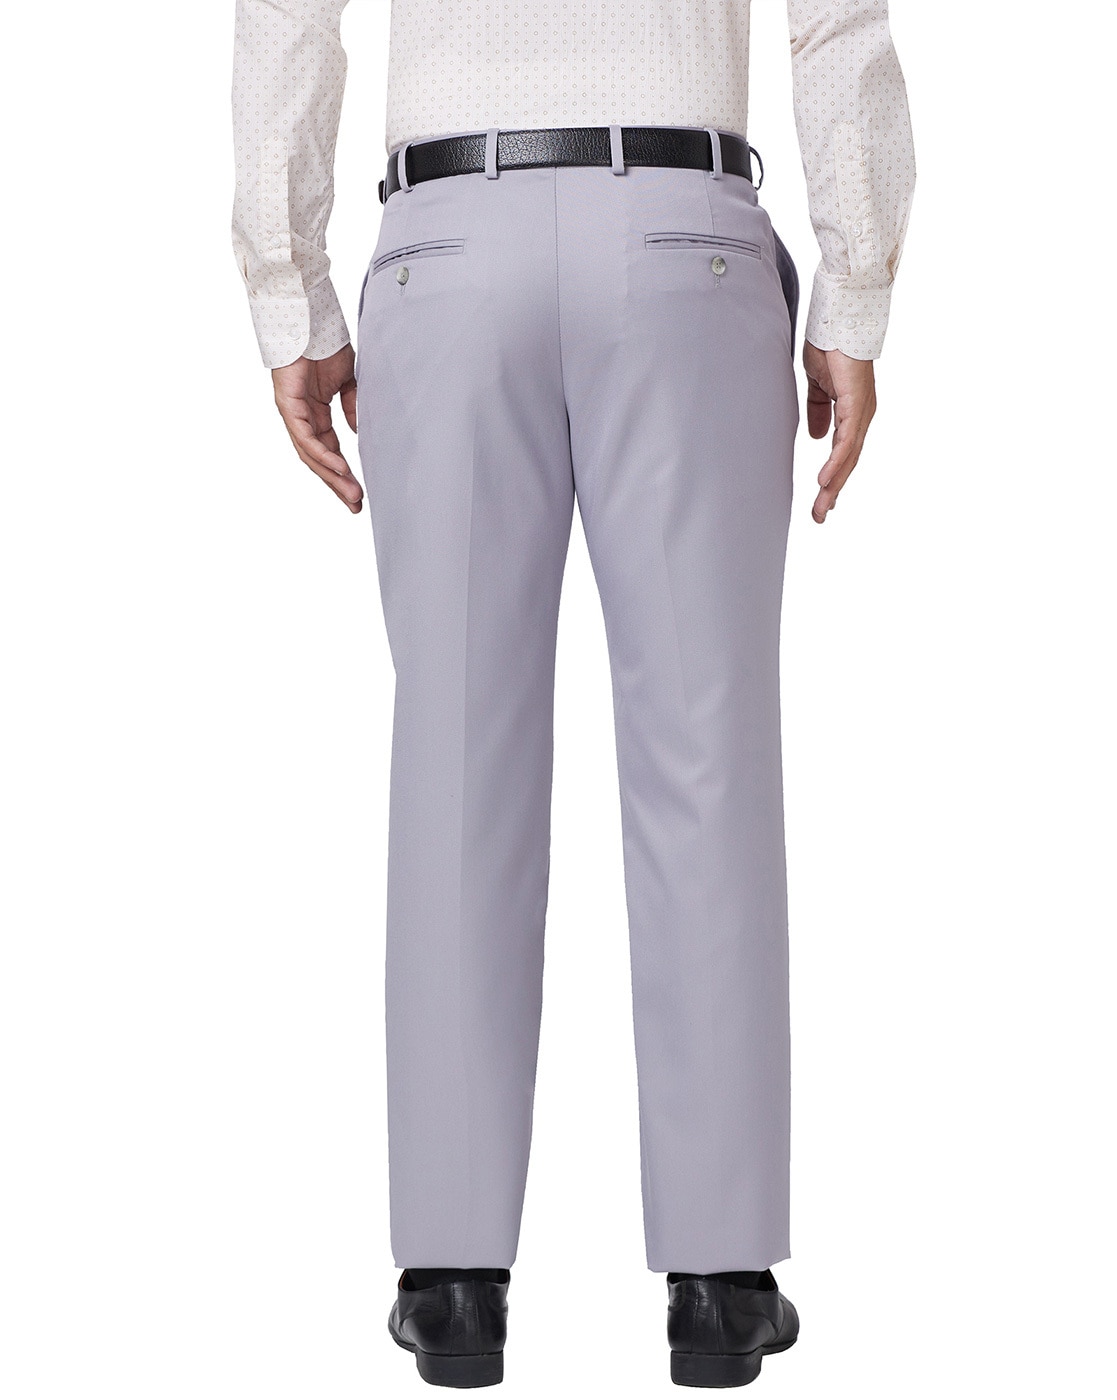 Buy Park Avenue Men's Slim Fit Cotton Casual Trouser (PCTA00142-H5_Medium  Khaki_36W x 33L) at Amazon.in